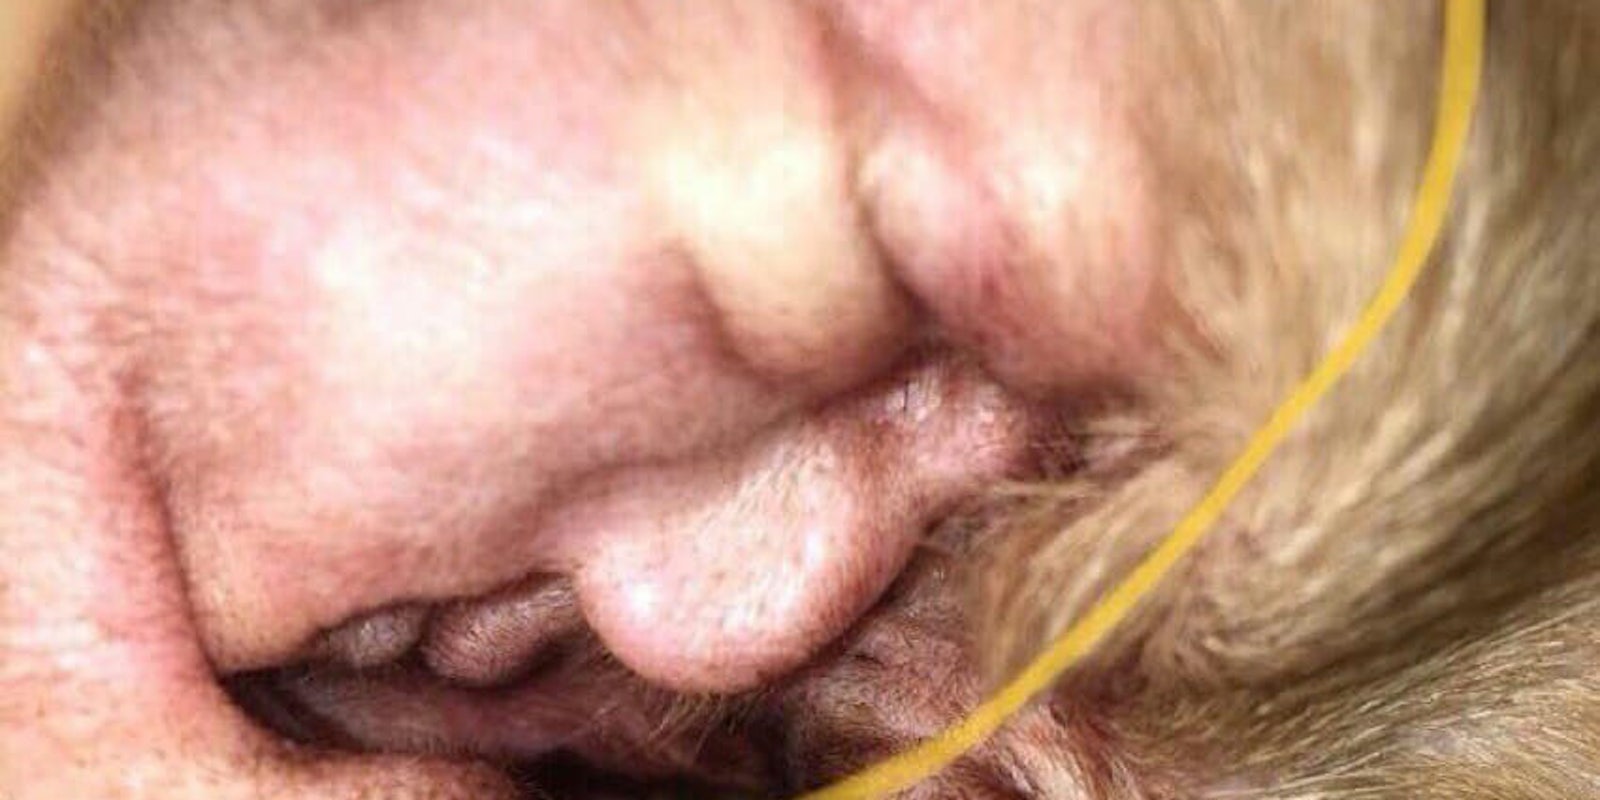 Trump dog ear